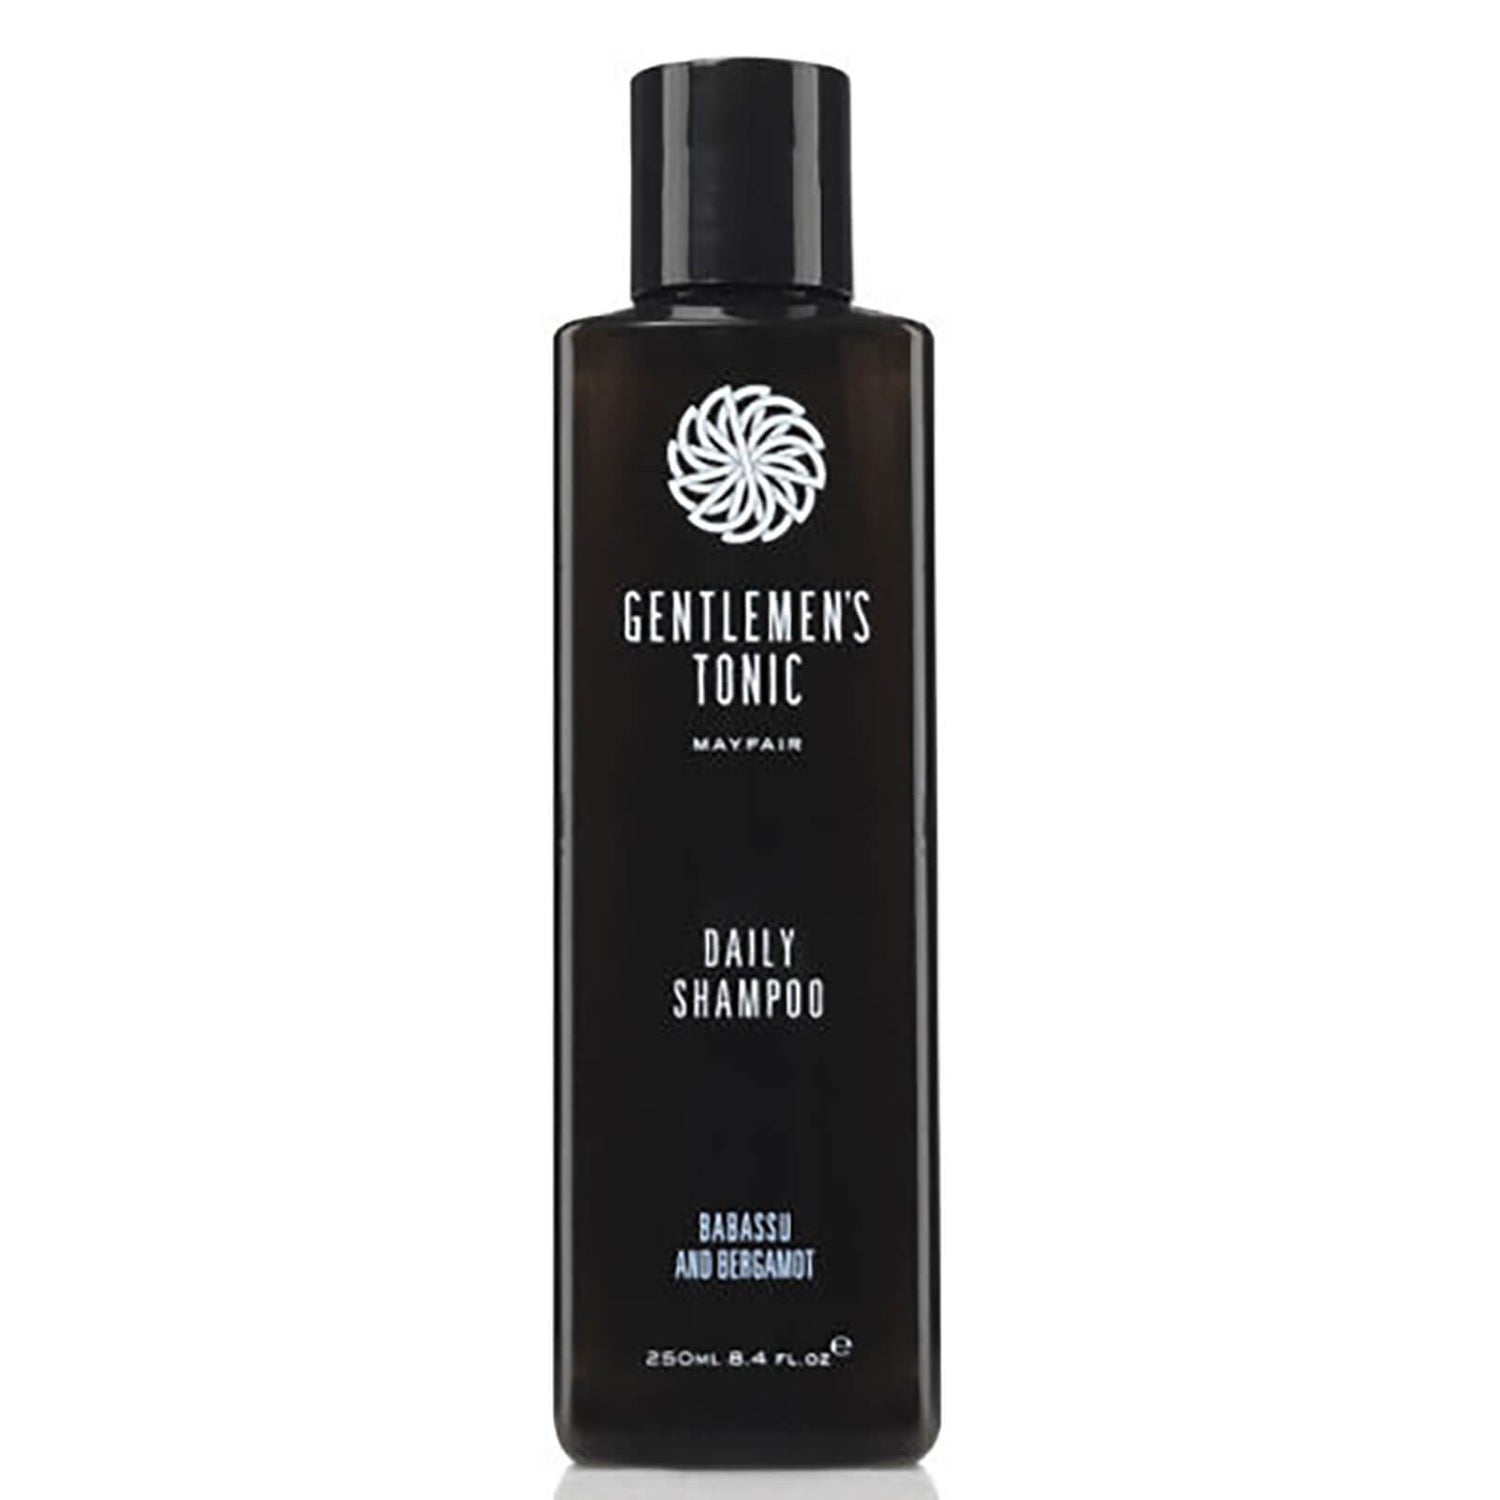 Shampoing quotidien Gentlemen's Tonic Daily Shampoo (250ml):